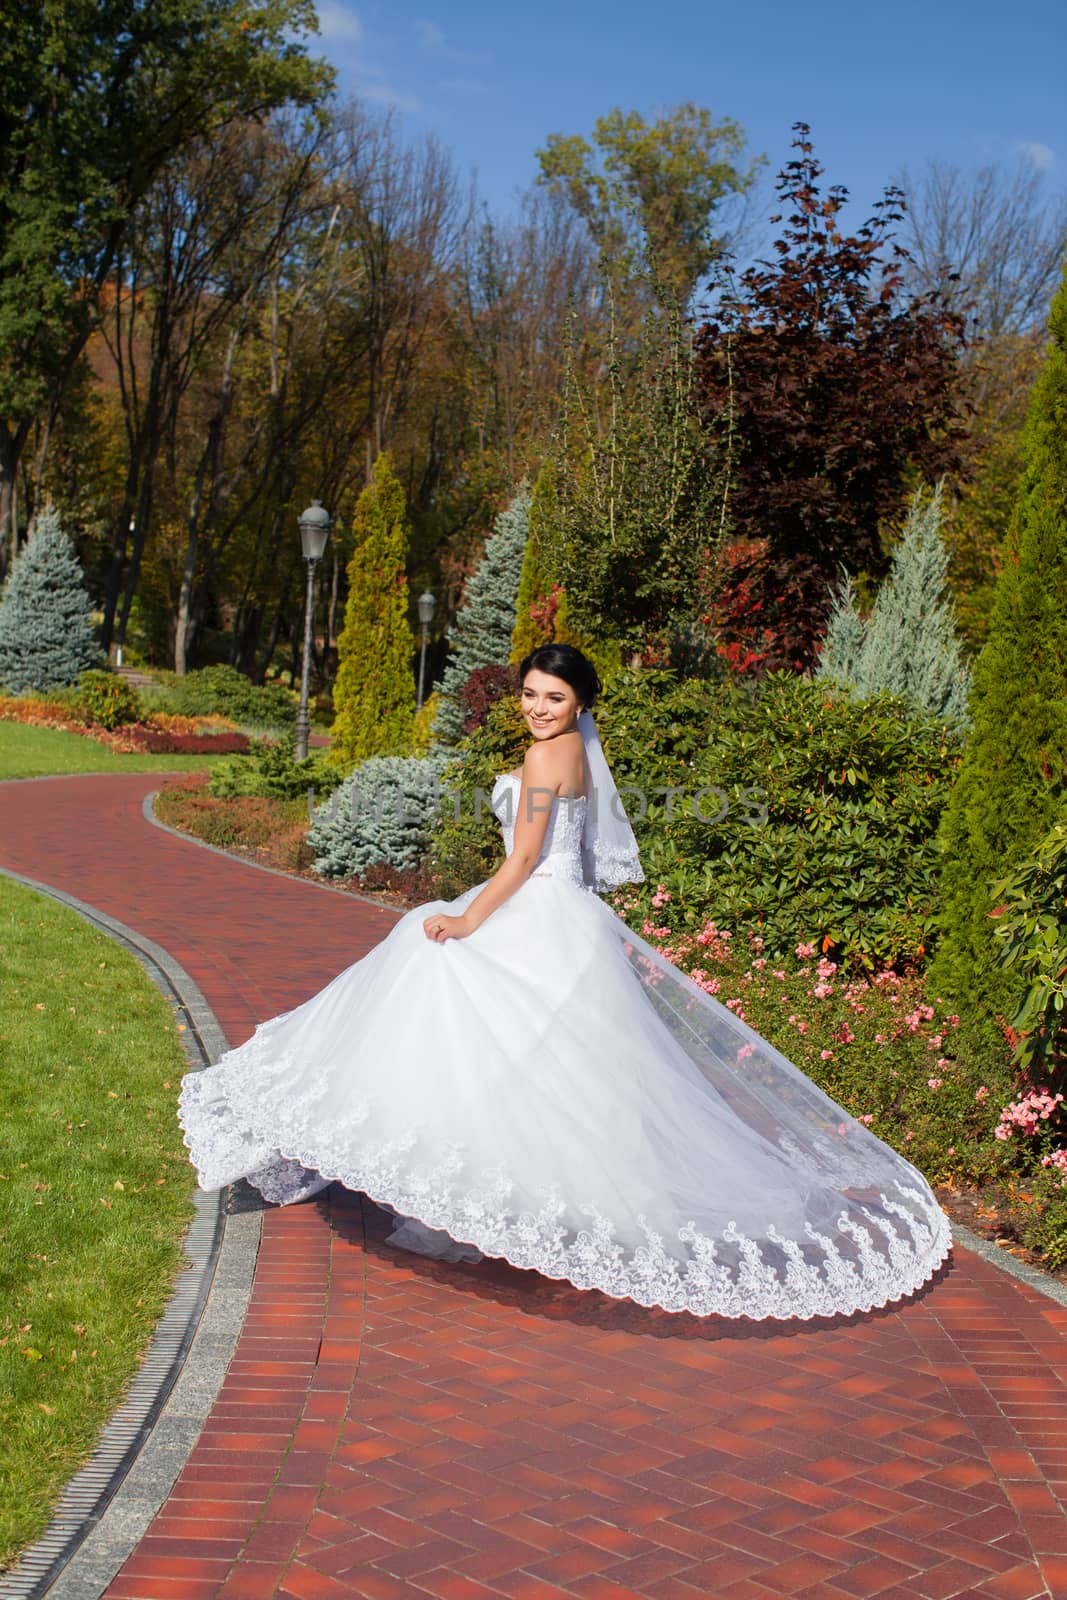 Bride on promenade in summer park posing on photo